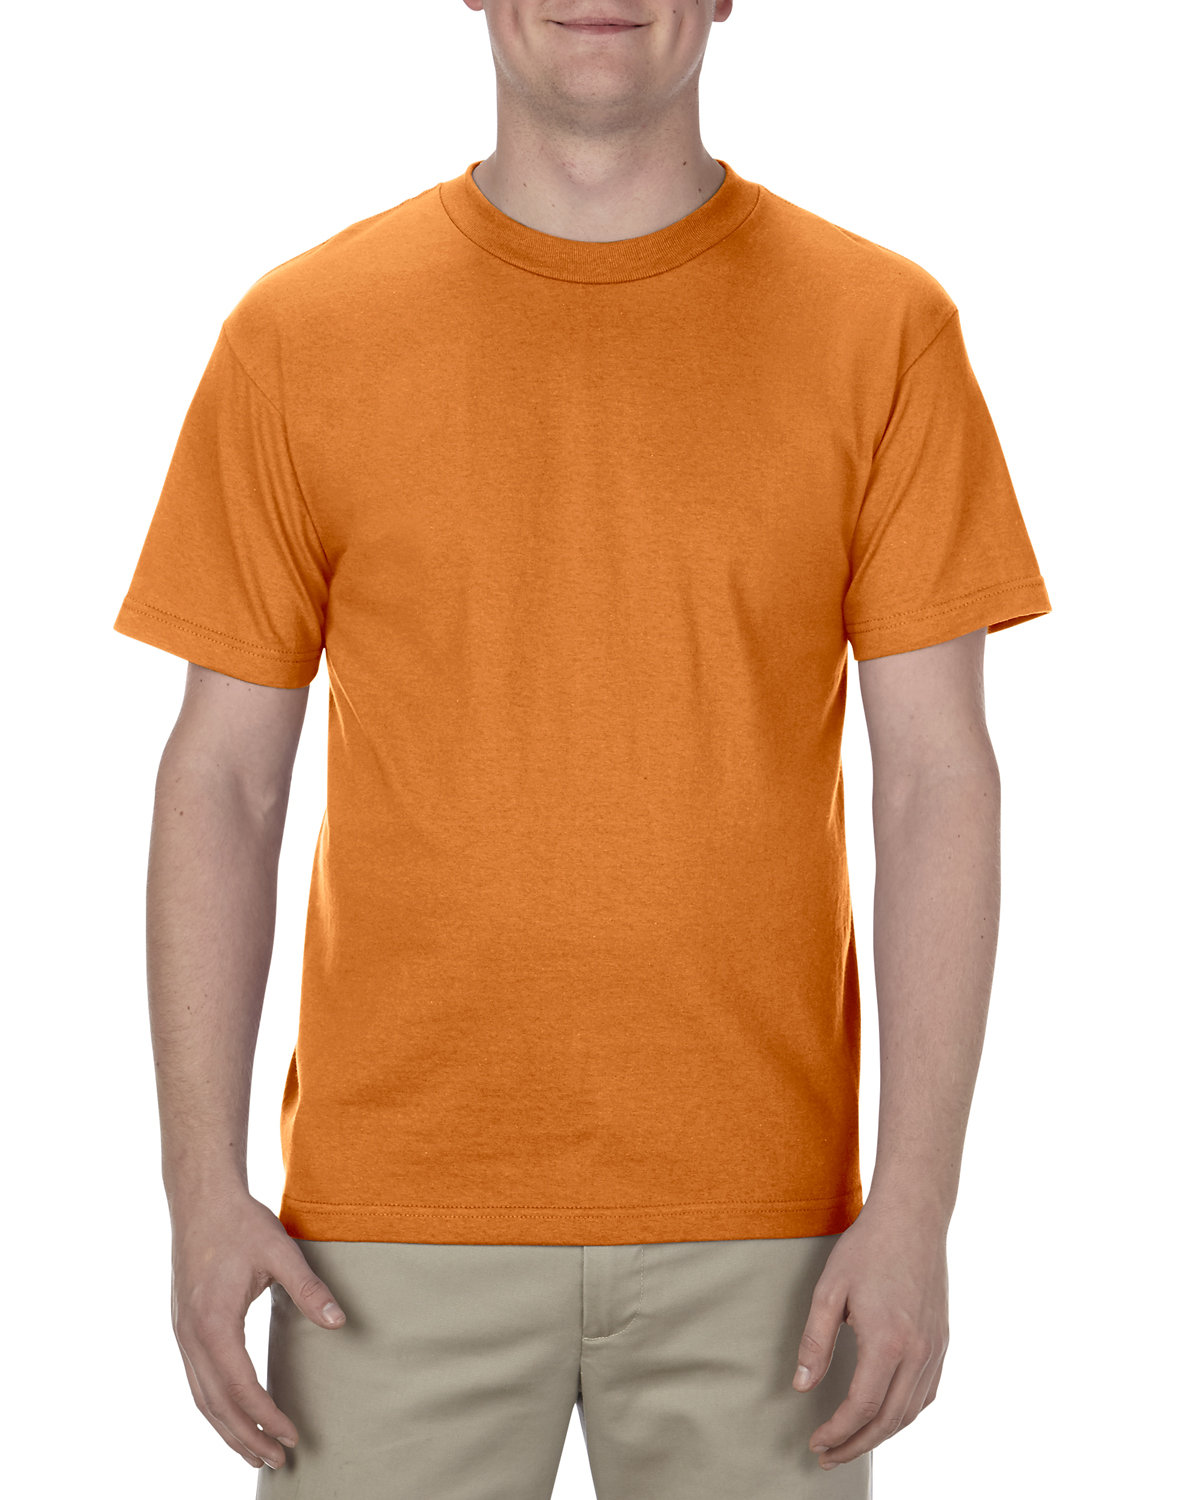 American Apparel Adult 6.0 oz., 100% Cotton T-Shirt ORANGE 